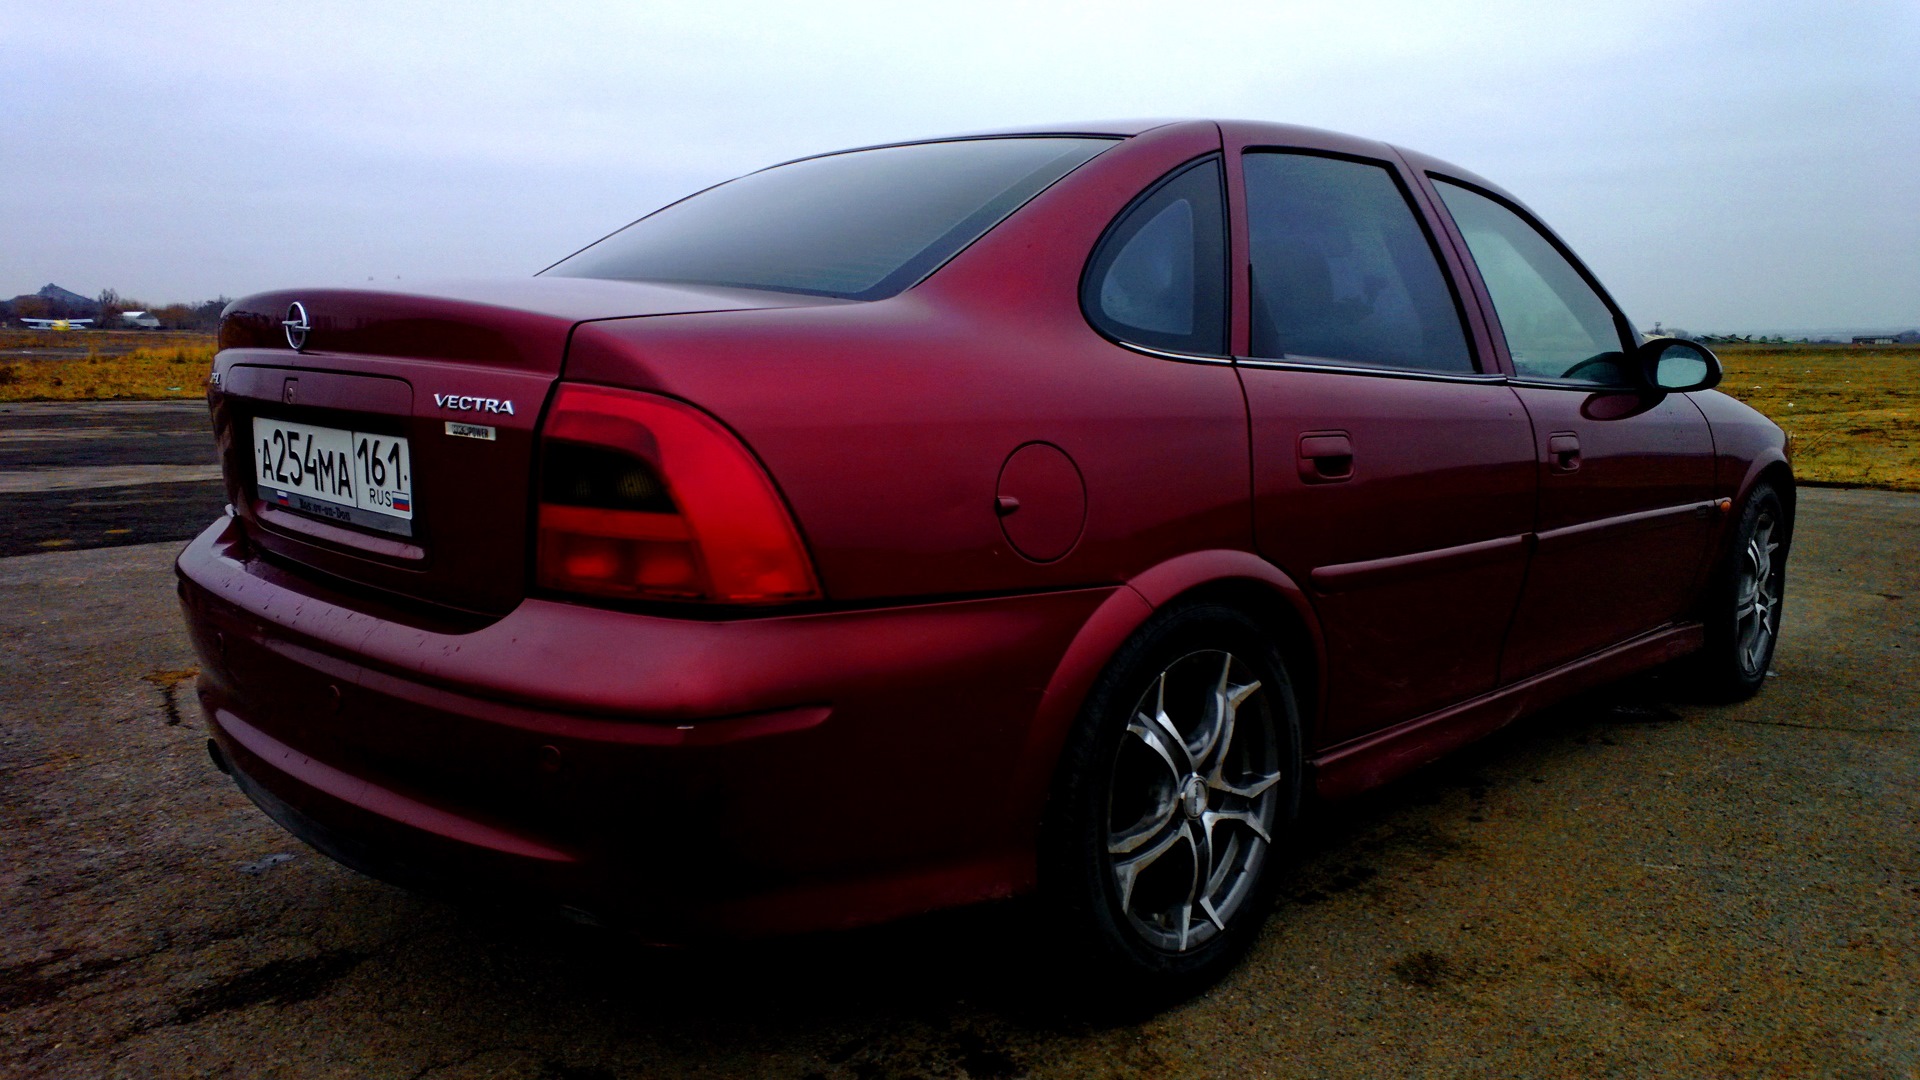 2001 Opel Vectra b 2.2. Опель Вектра б Вишневая. Opel Vectra b красный. Опель Вектра б красный.